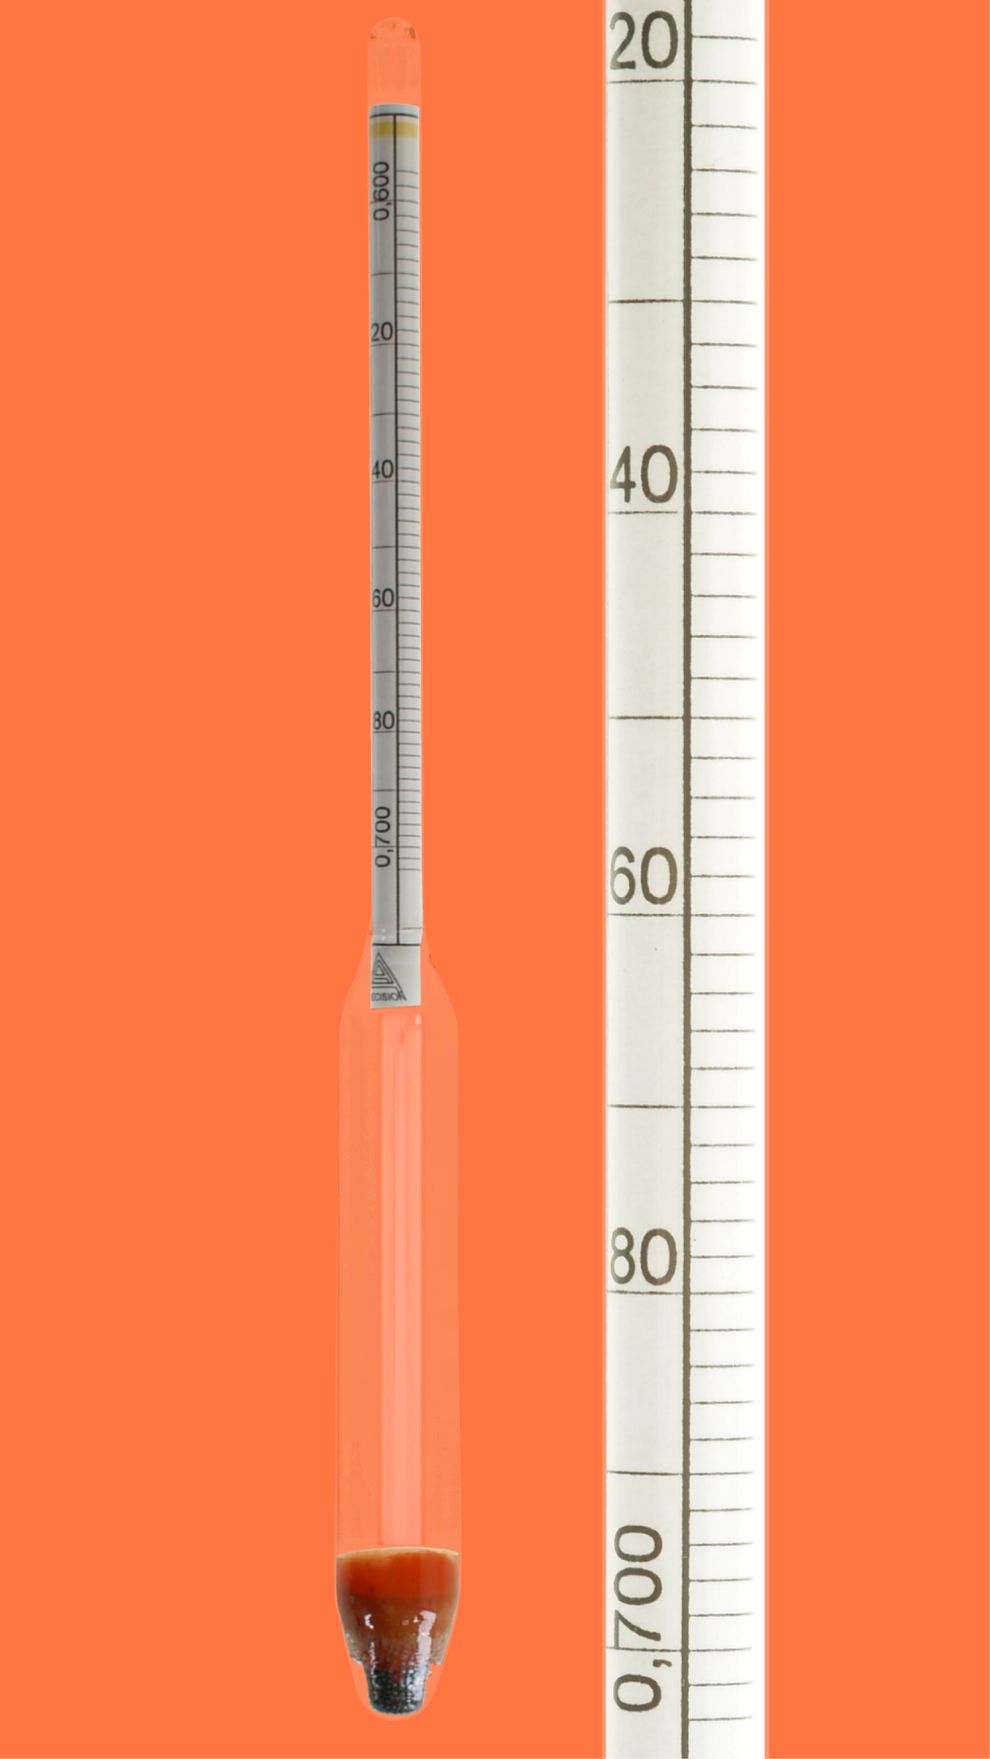 Aräometer, DIN 12791, M100, 1,90-2,00:0,0020g/cm³, Bezugstemp. 20°C, ohne Thermometer